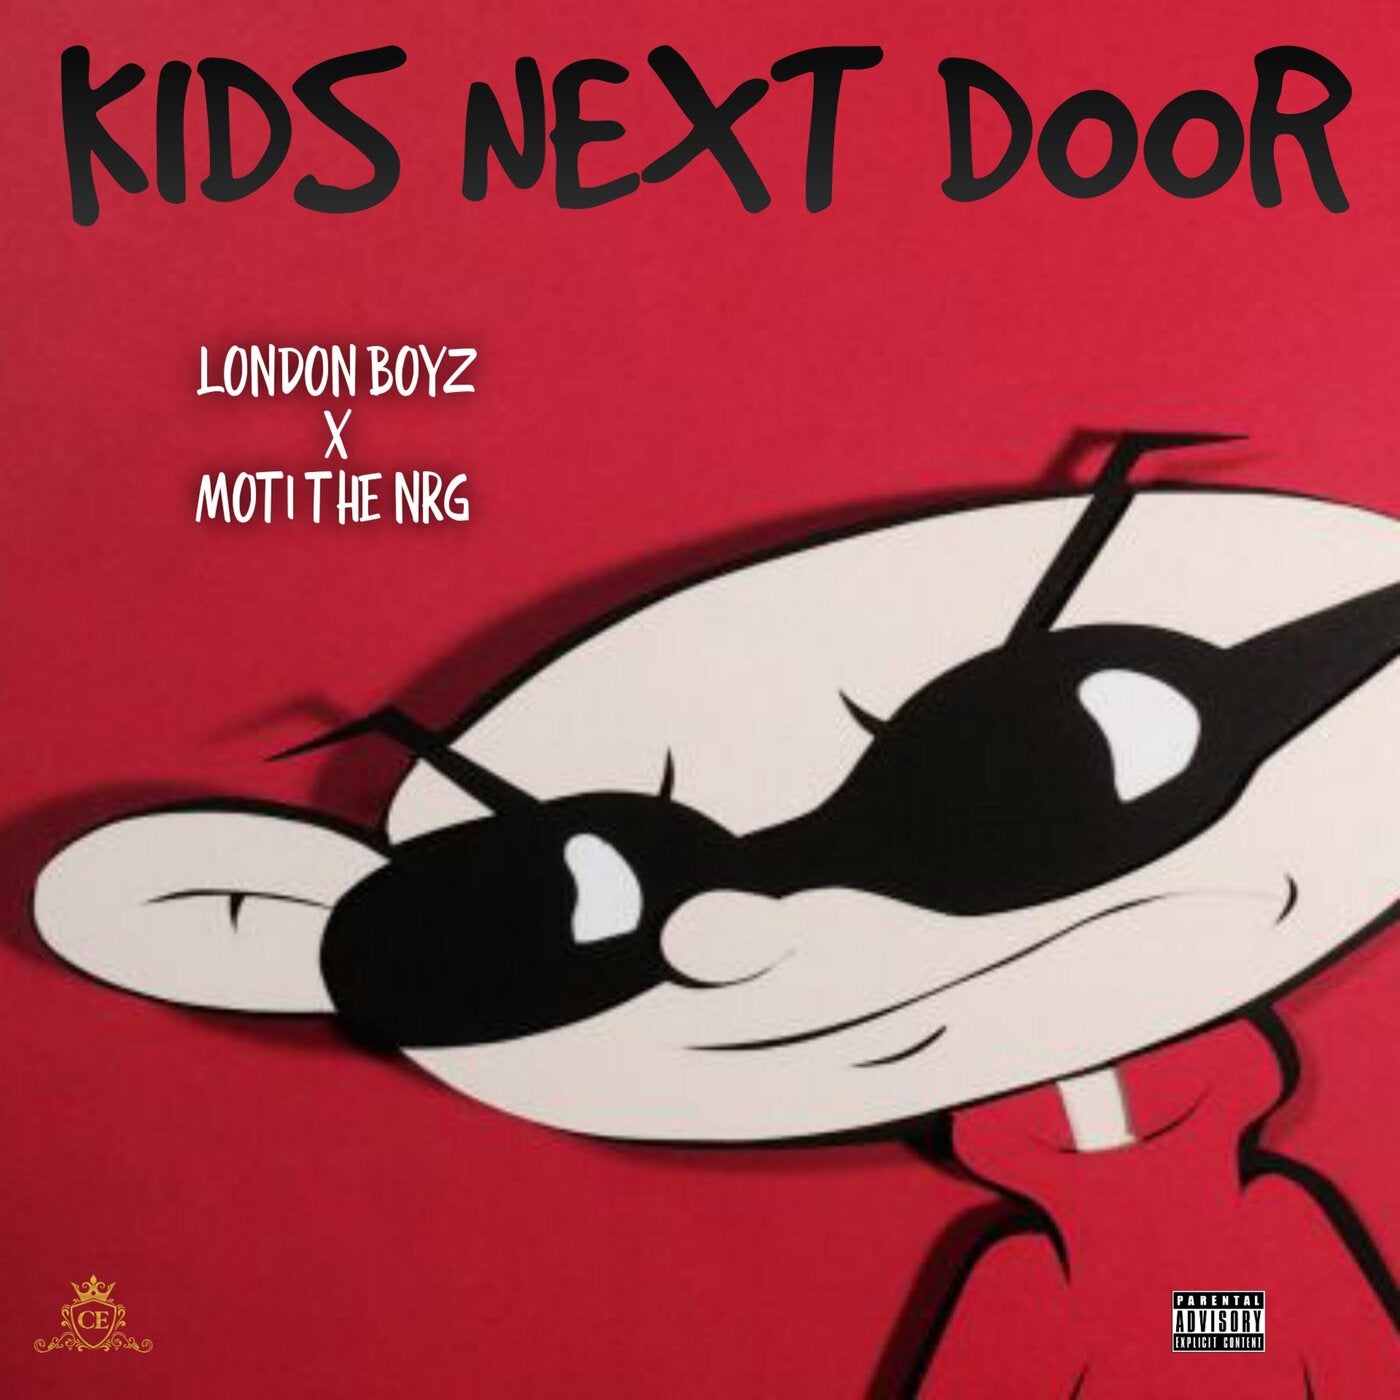 Kids Next Door By London Boyz And Moti